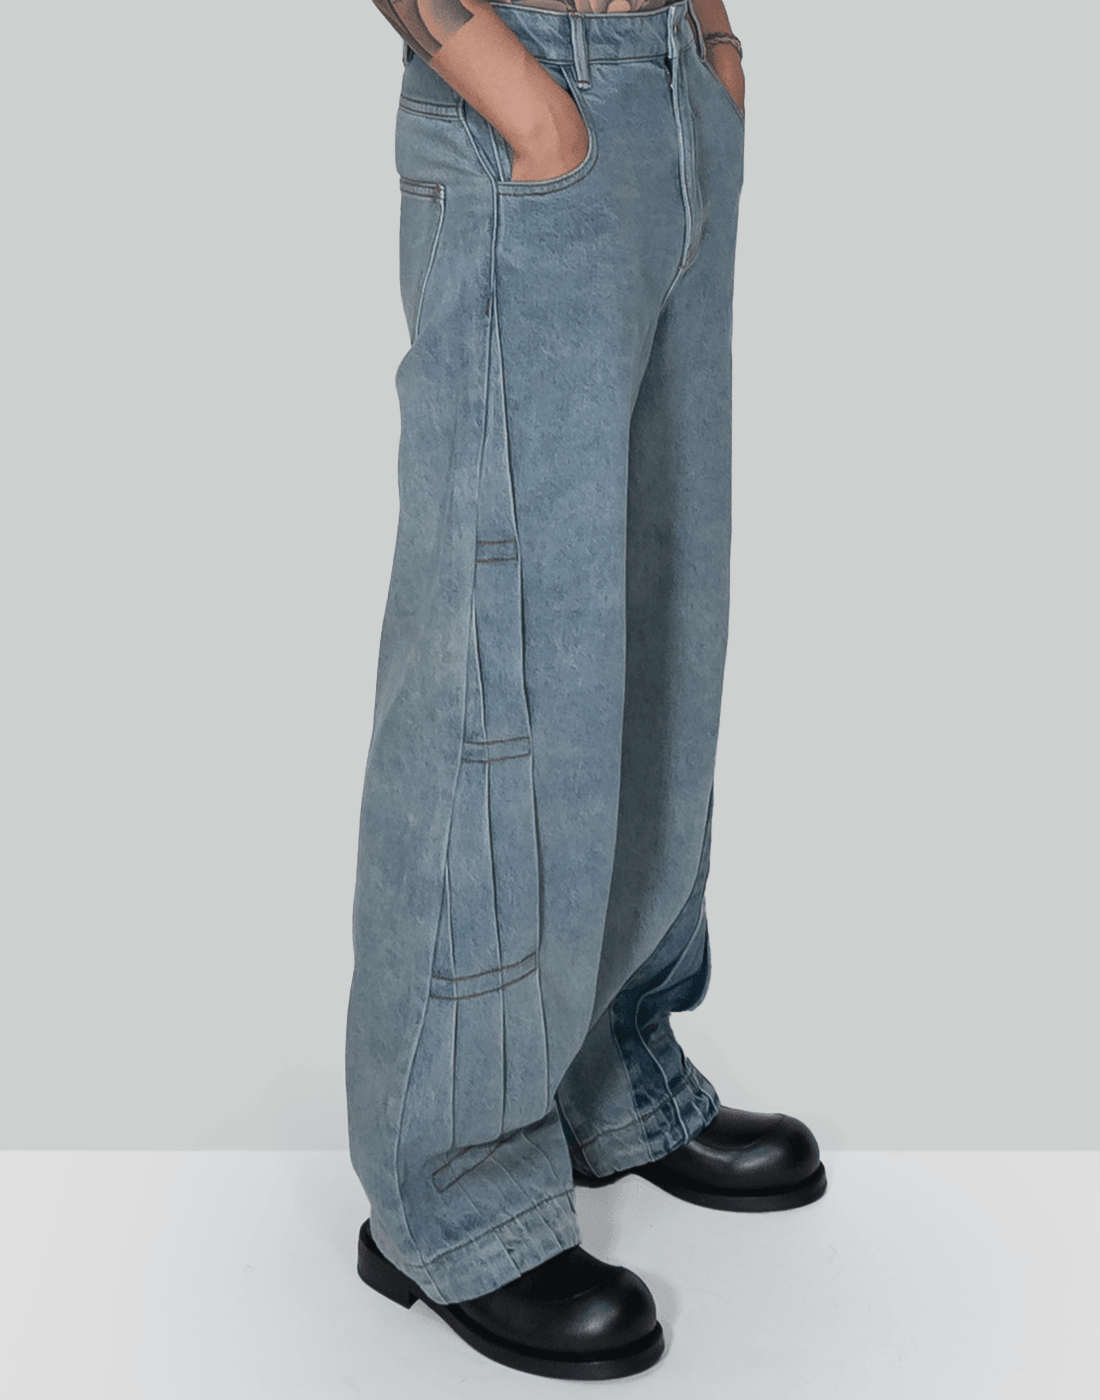 feng chen wang pleated denim jeans着用は10回未満です